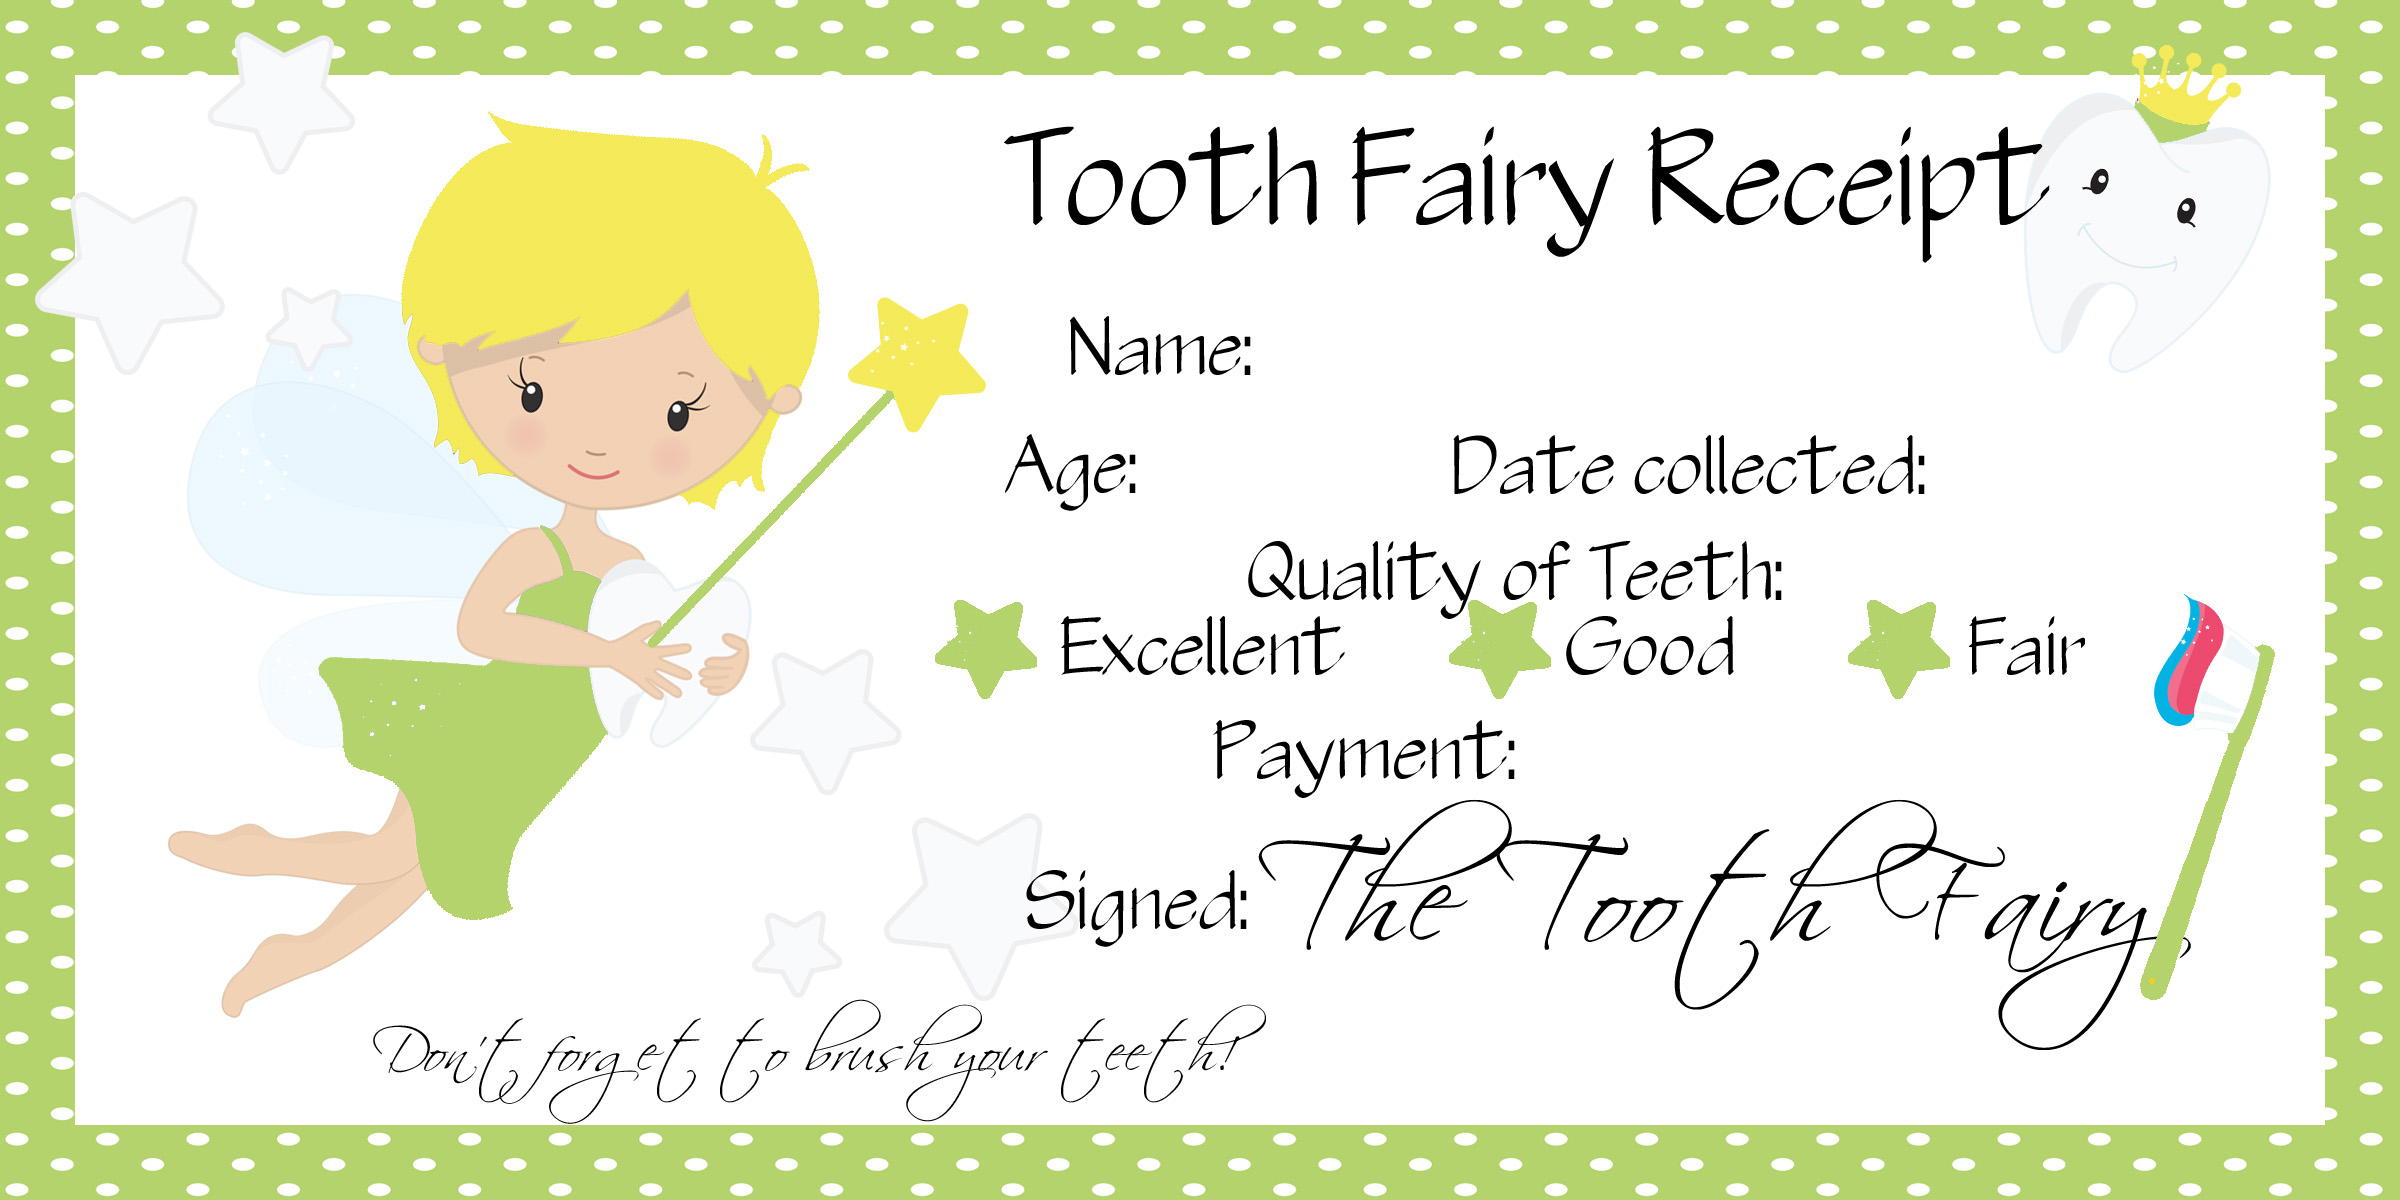 tooth-fairy-receipt-blank-green.jpg